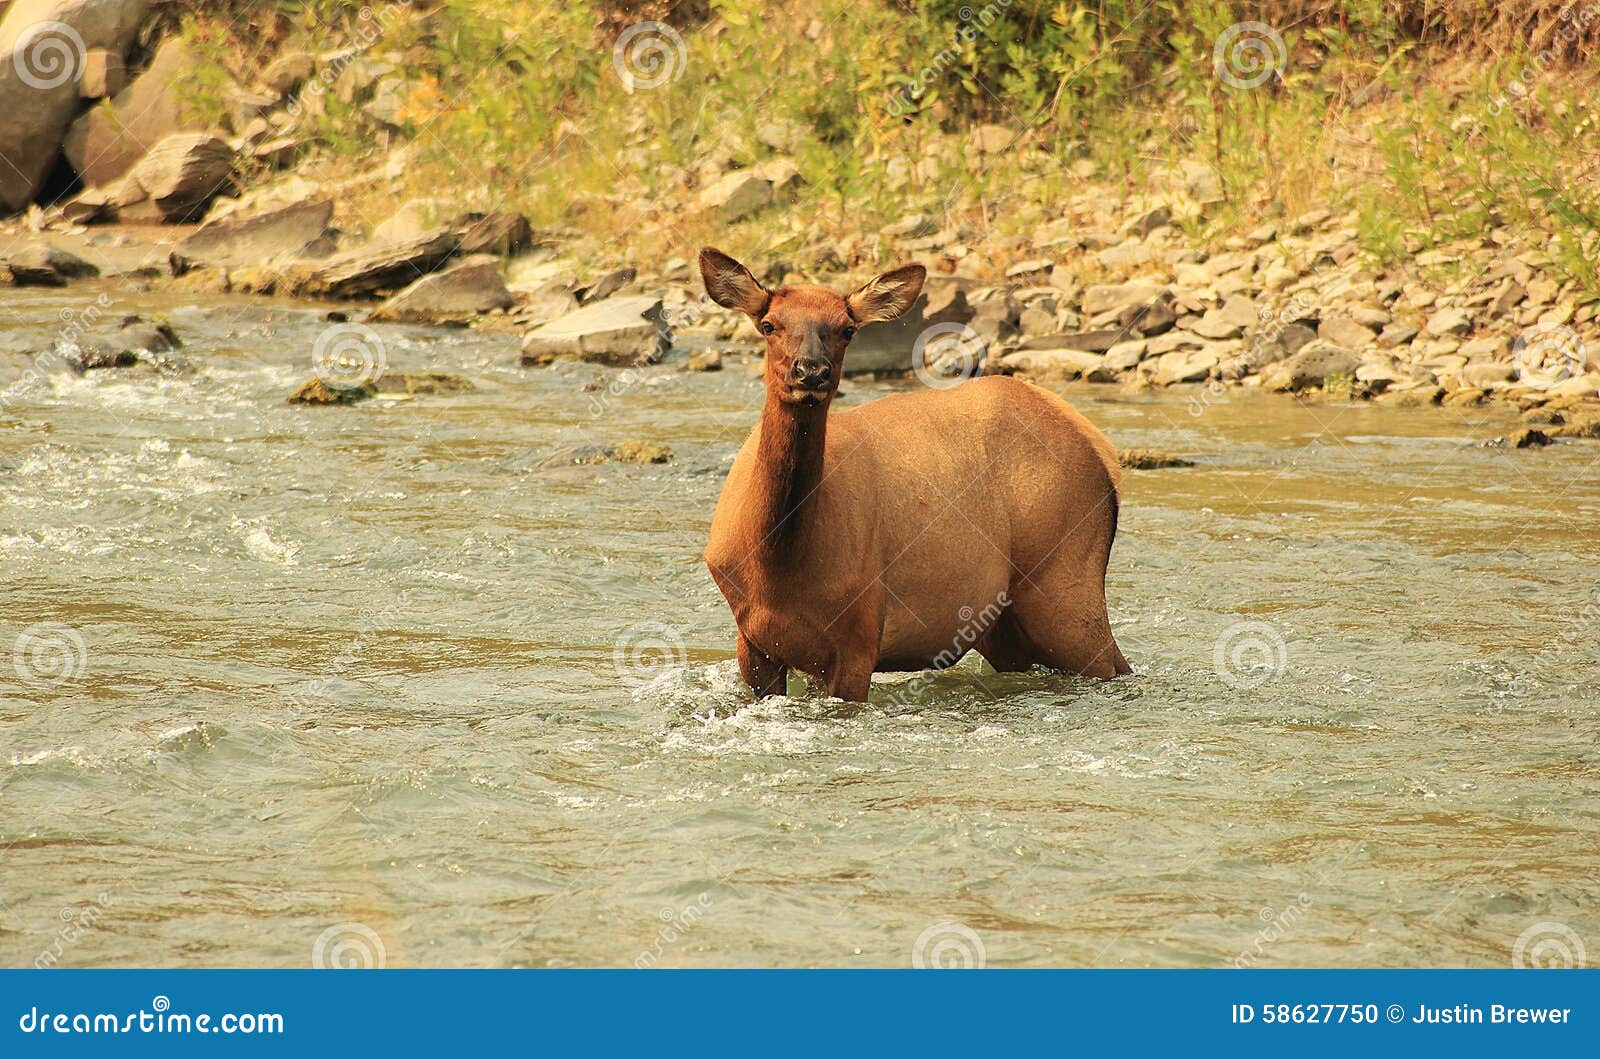 elk - river crossing 03